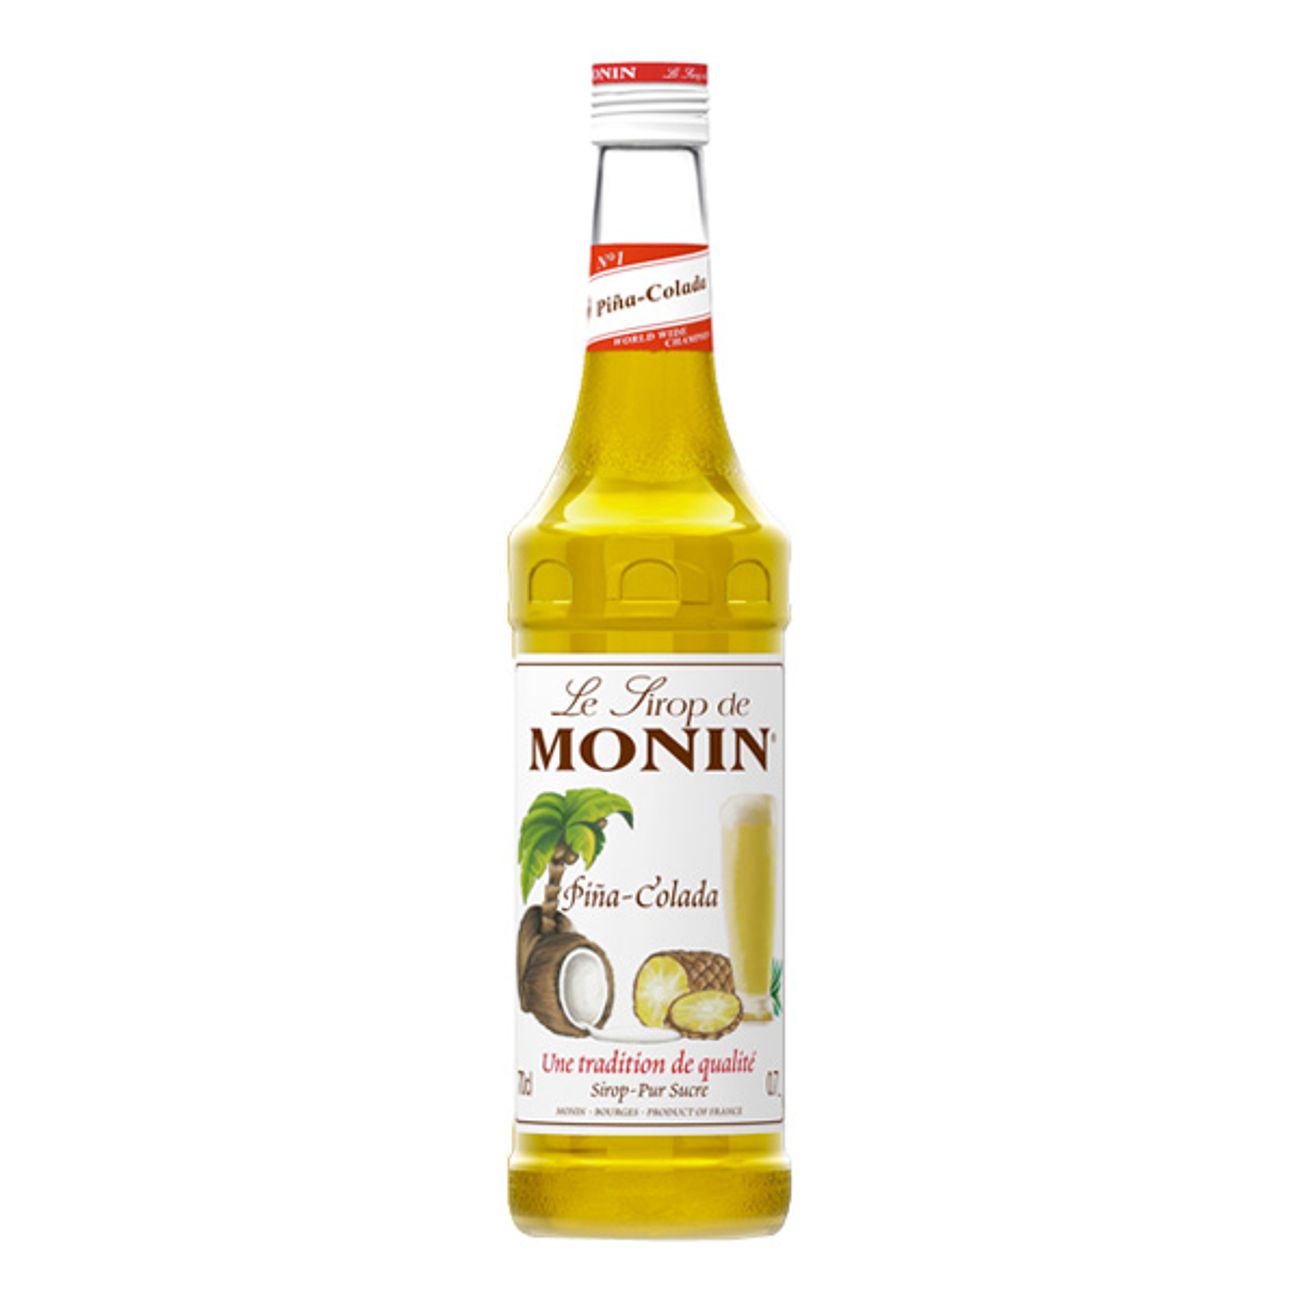 monin-pina-colada-1